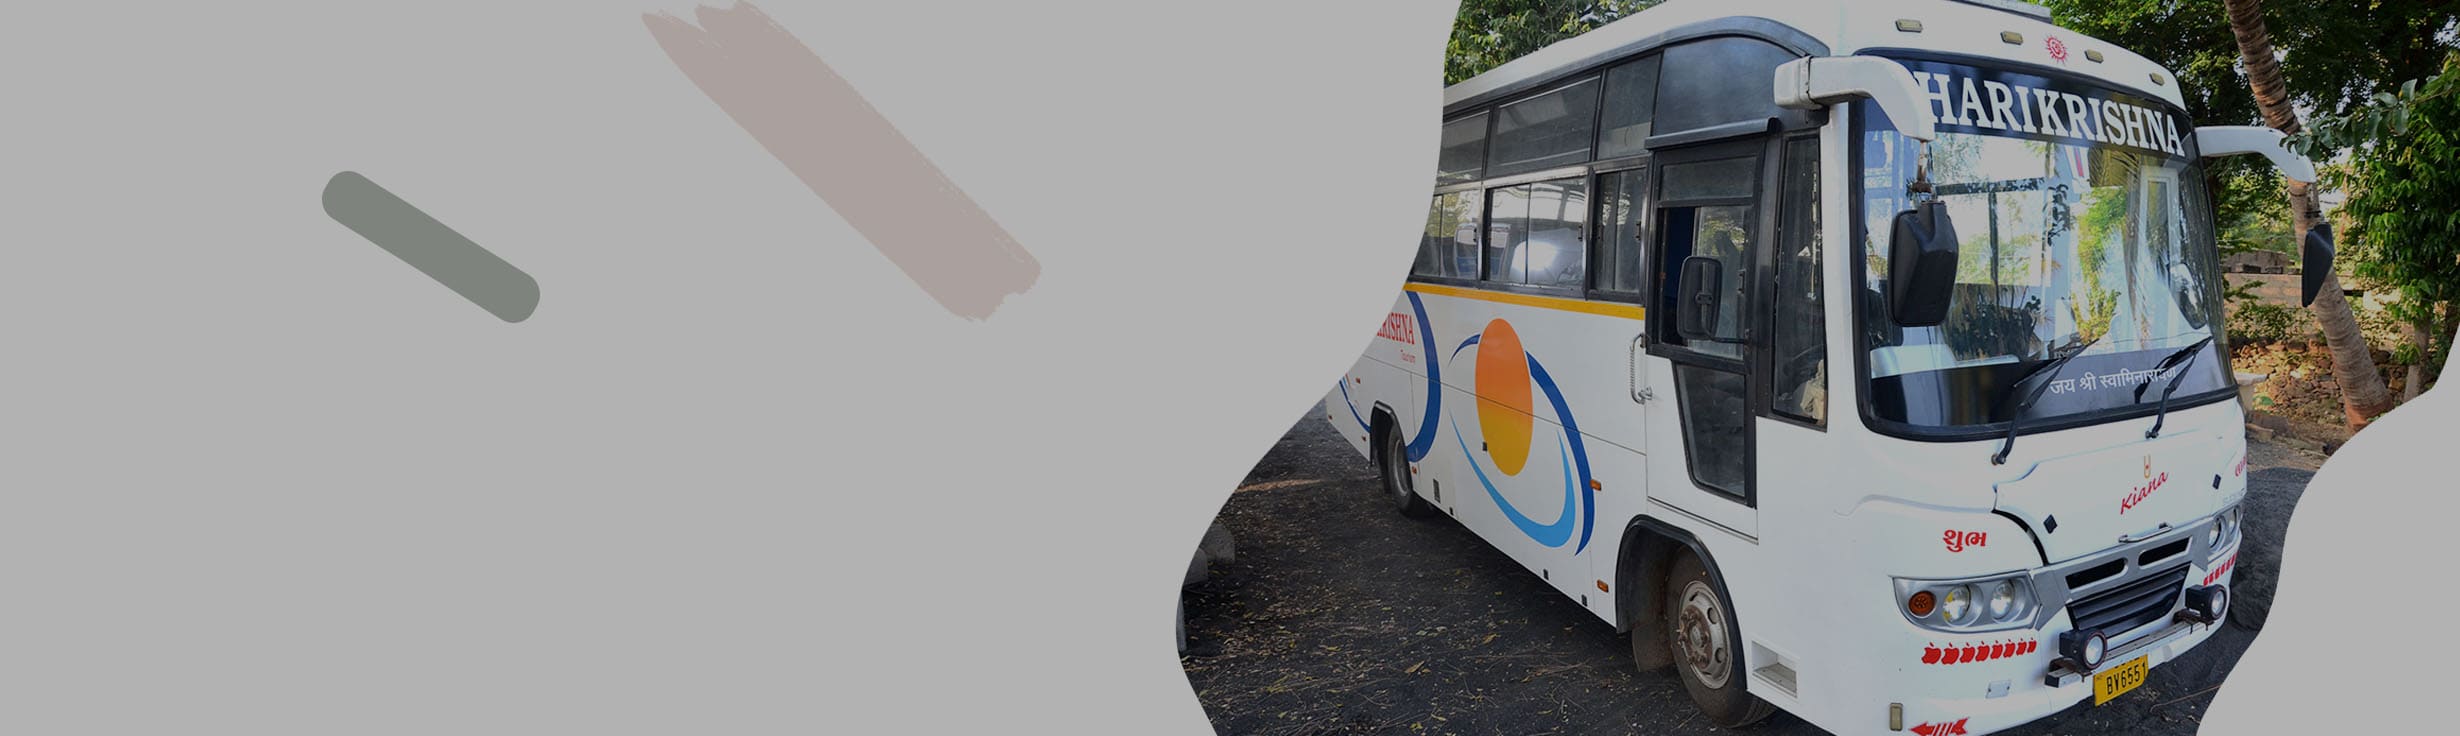 Seating Minibus for Rann of kutch Tour in Gandhidham